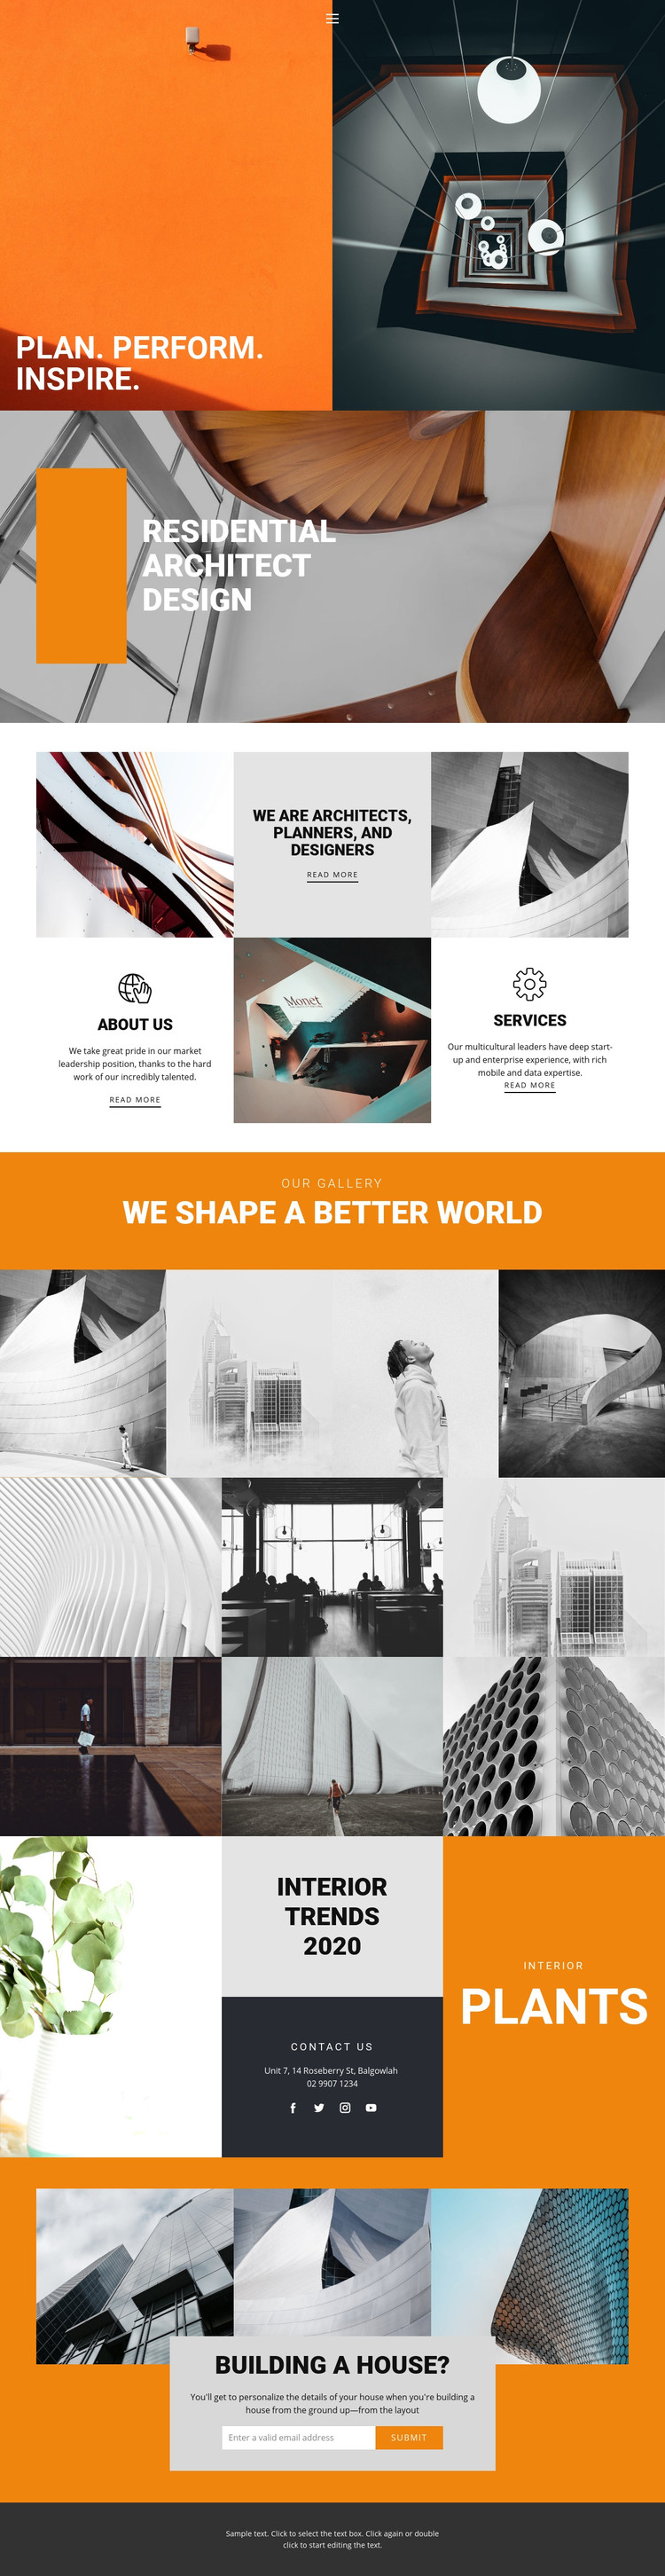 Inspiring ways of architecture Homepage Design